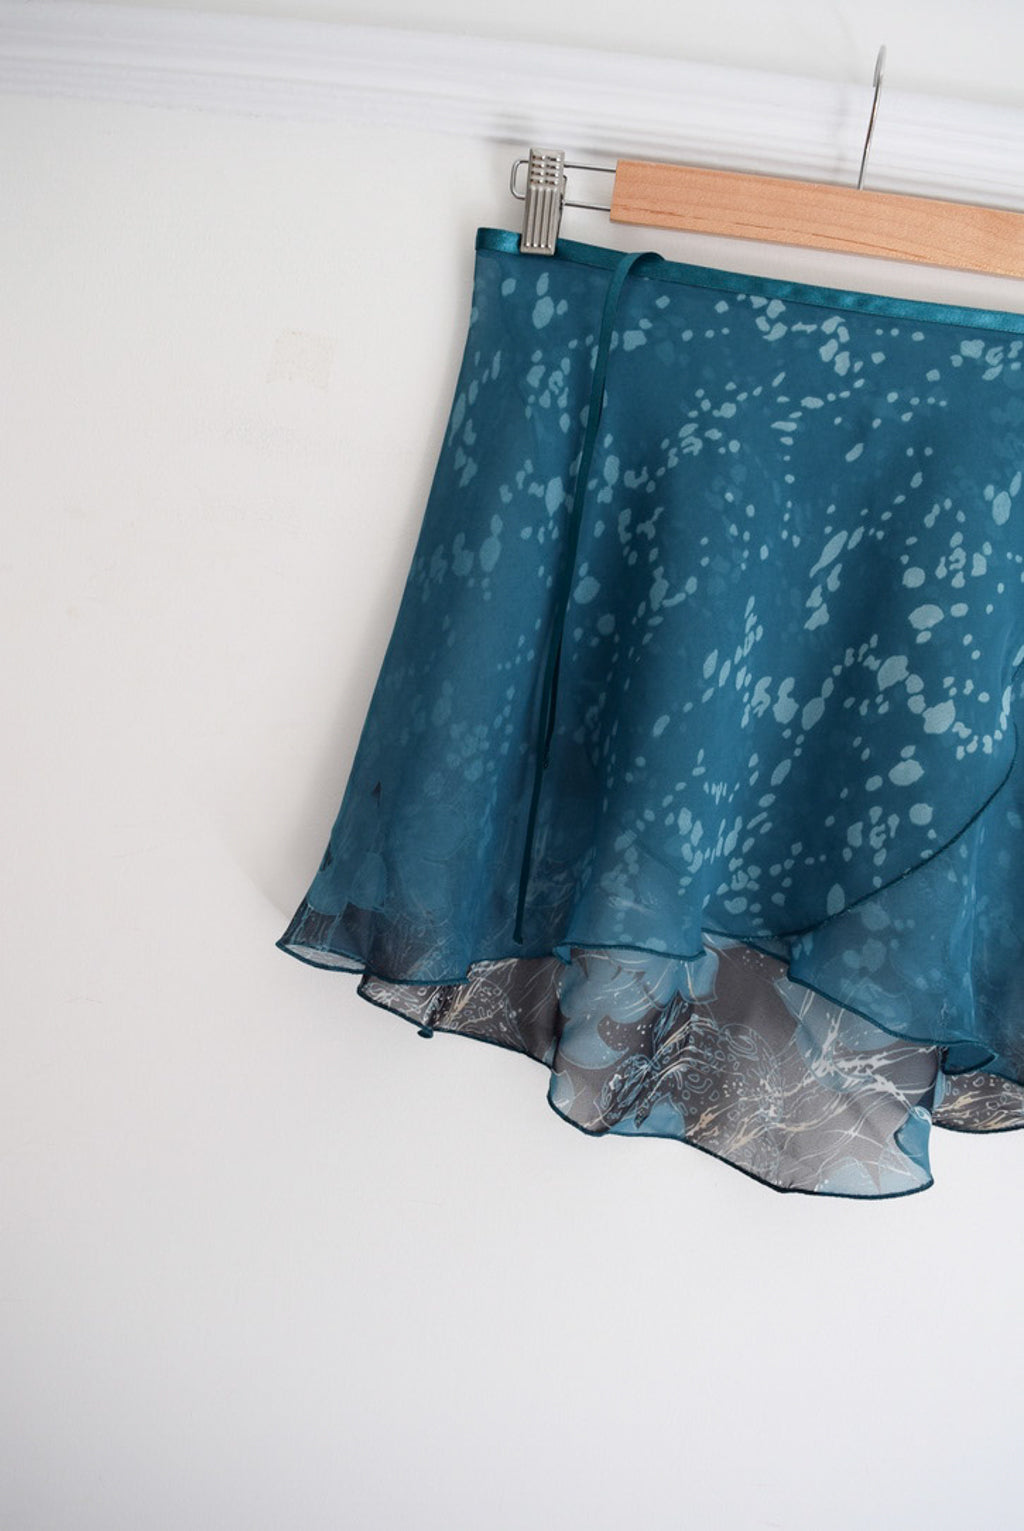 B.S.B.L Wrap Skirt 'Seabed' バレエ巻きスカート 40cm, 48cm, 53cm